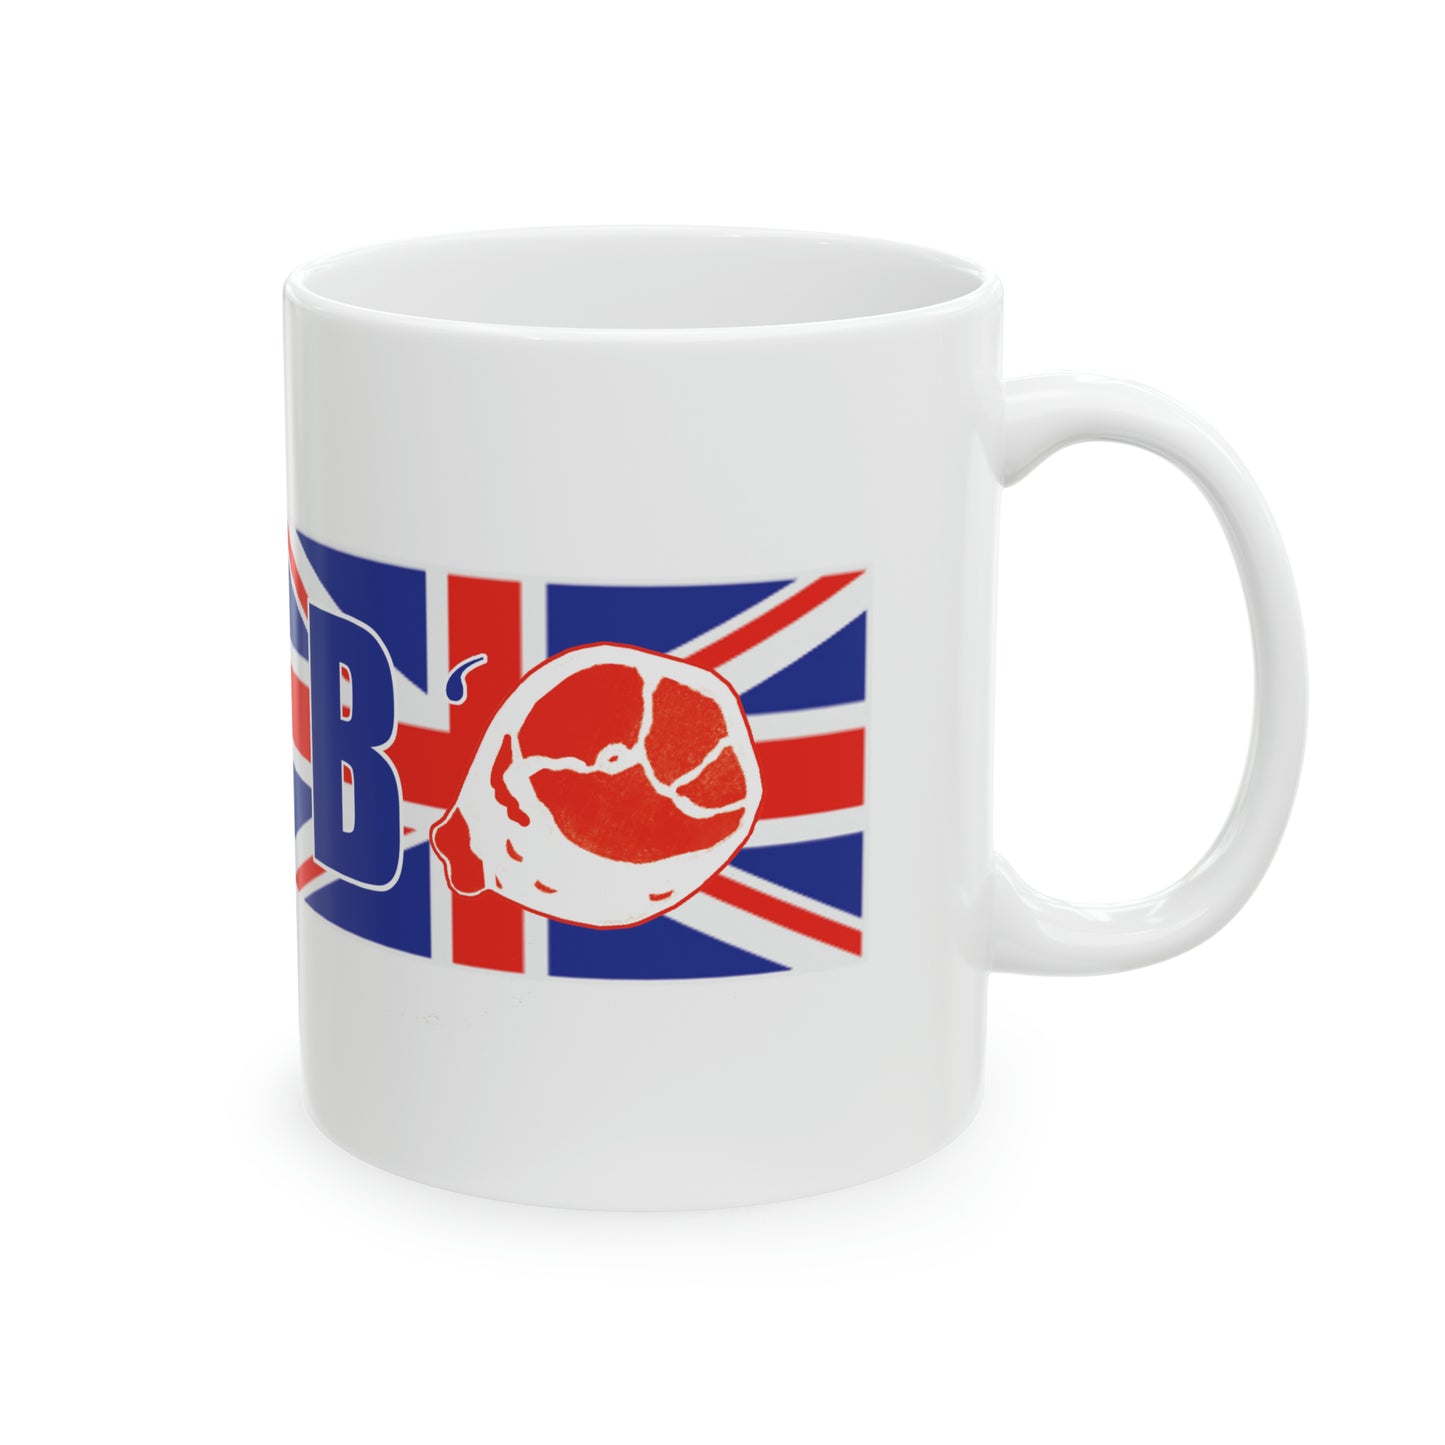 B'ham England Union Jack Coffee Mug